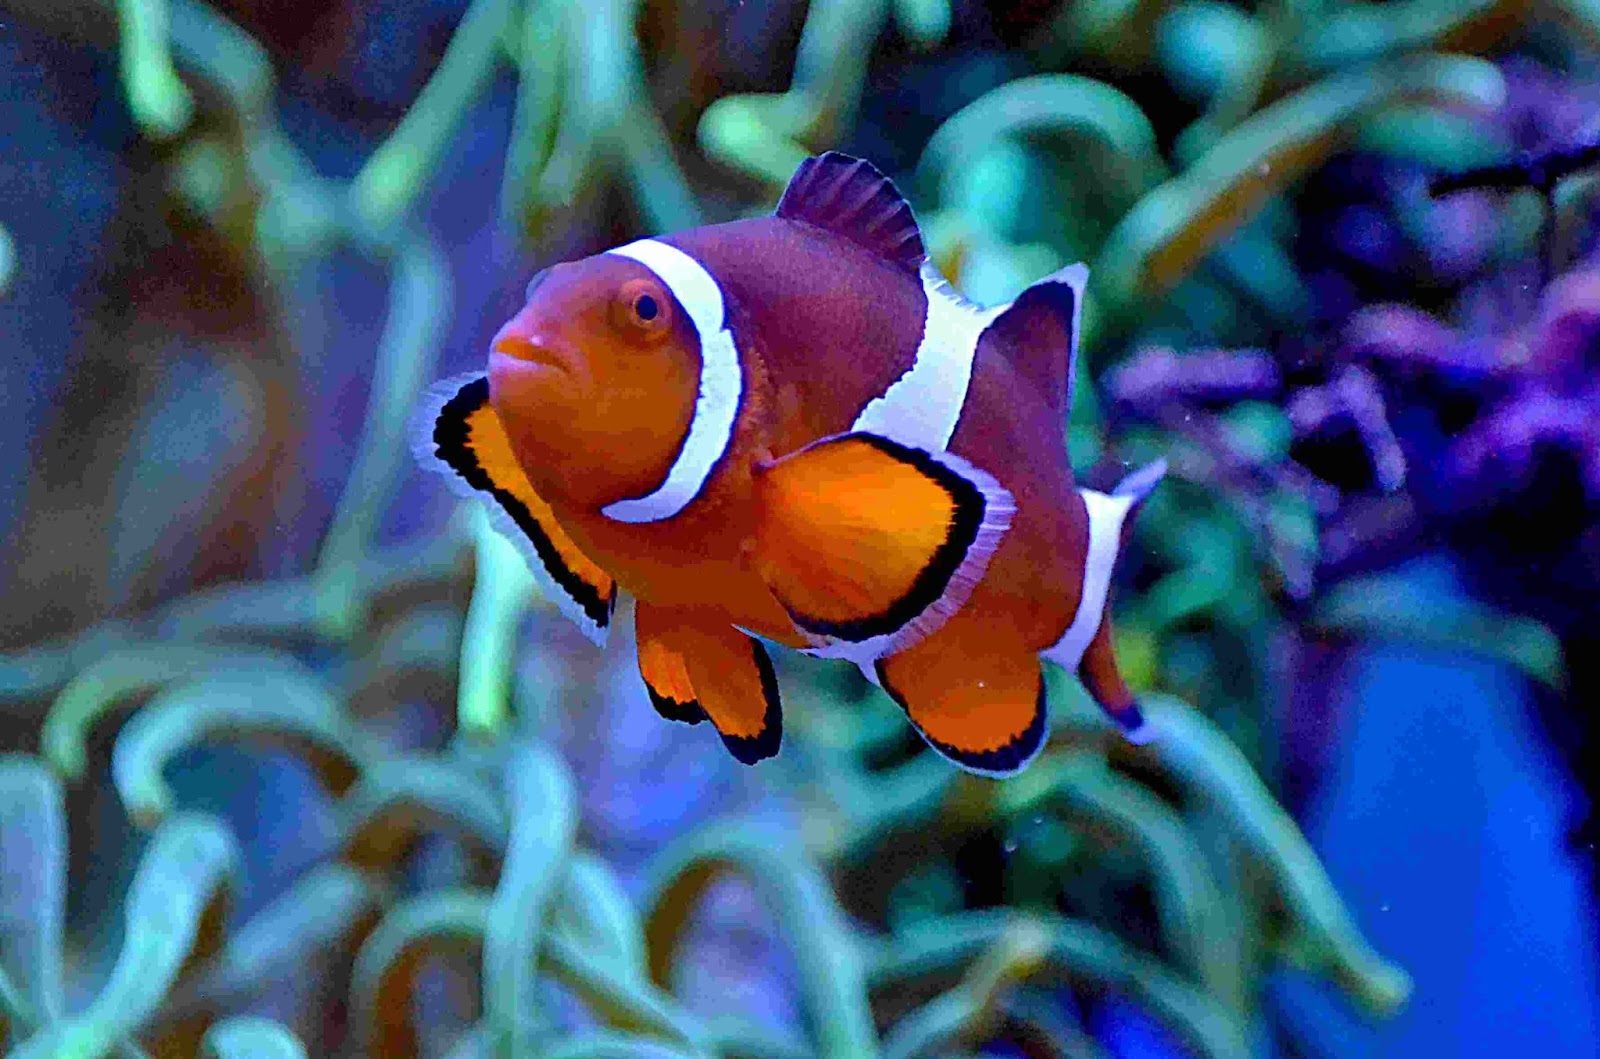 Clown fish, orange with white striped fish in the aquarium